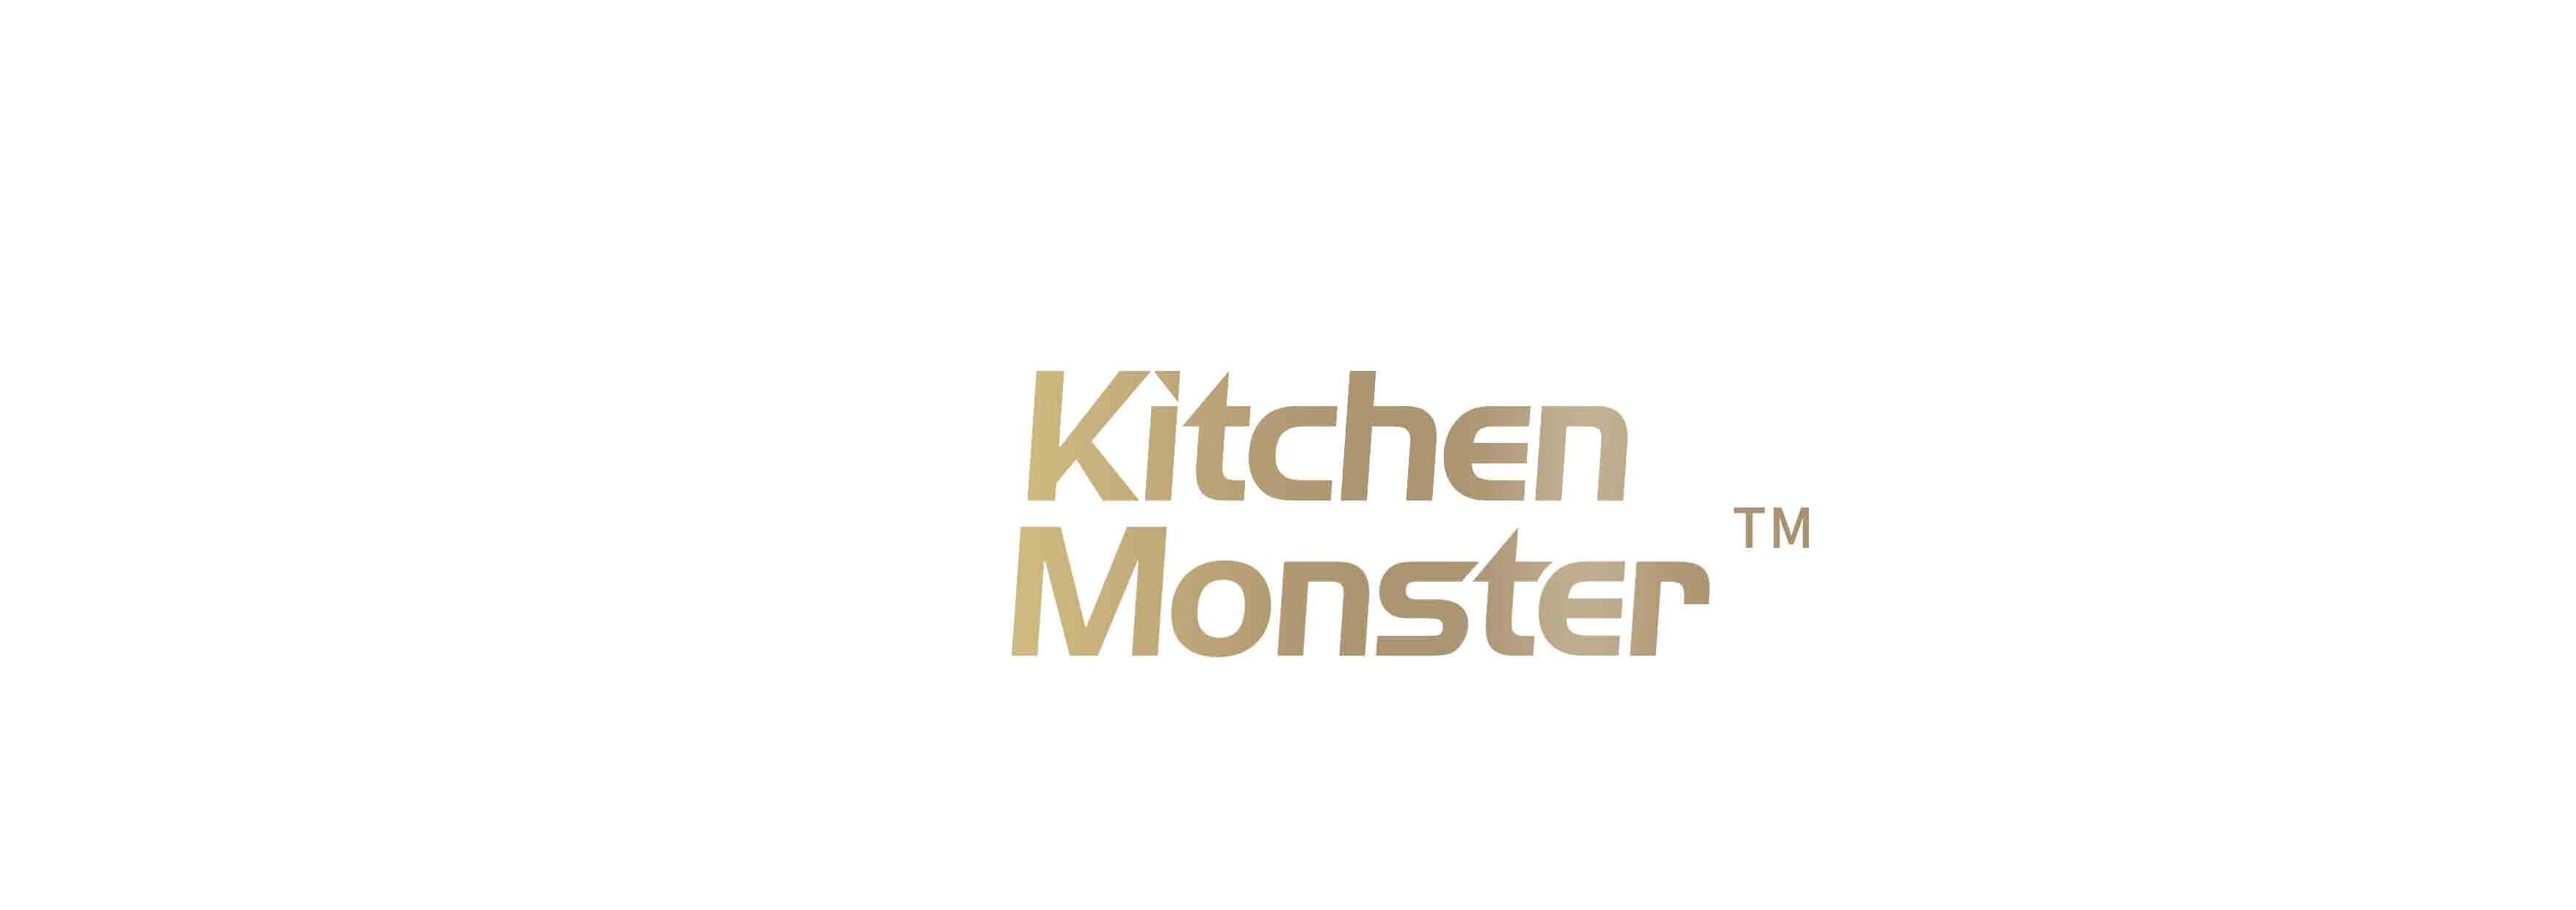 kitchen monster